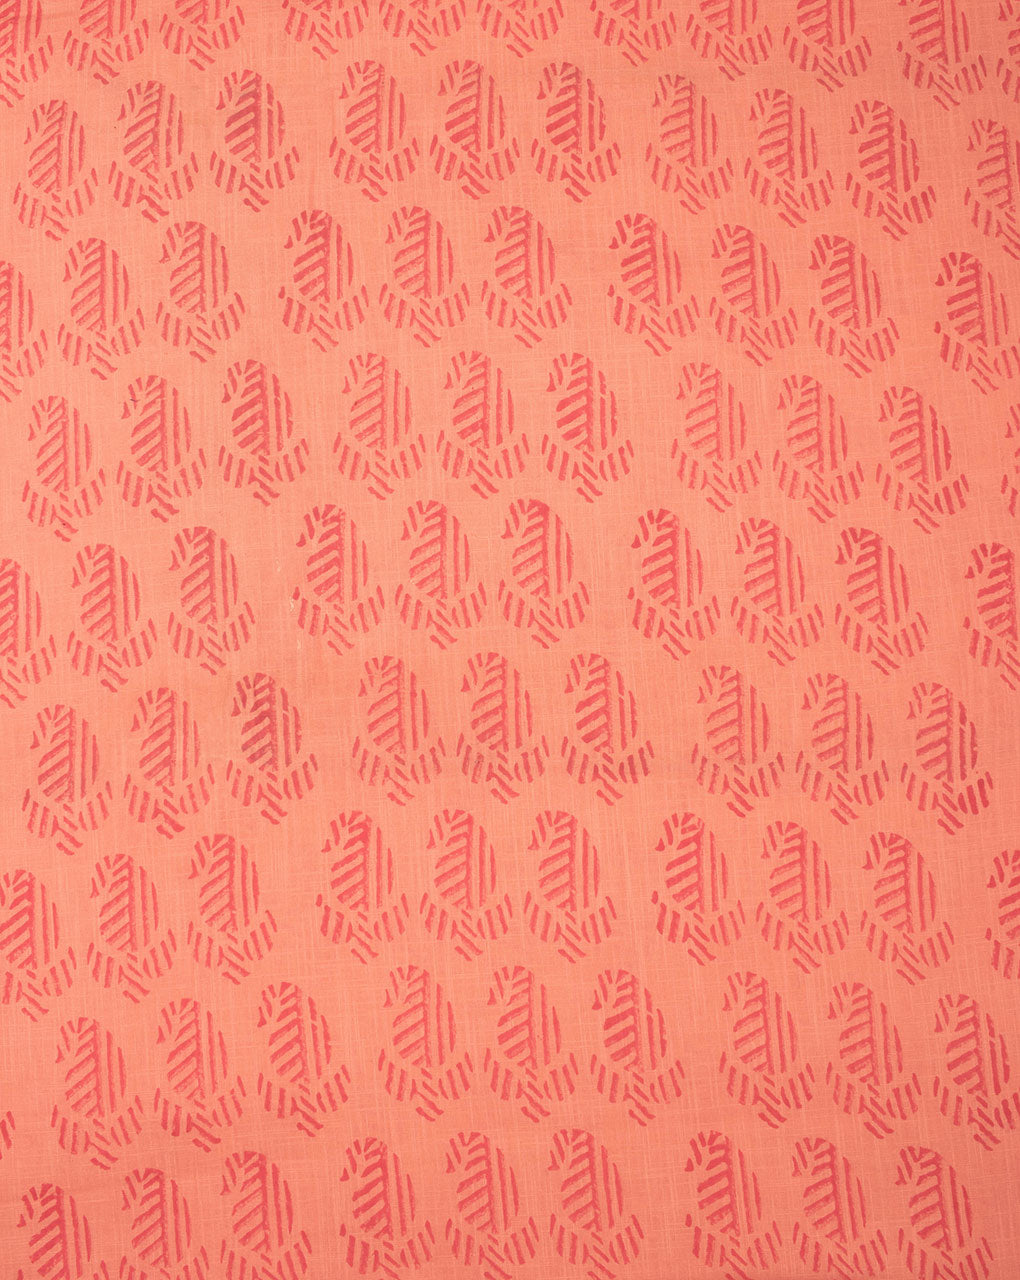 Screen Print Slub Cotton Fabric - Fabriclore.com